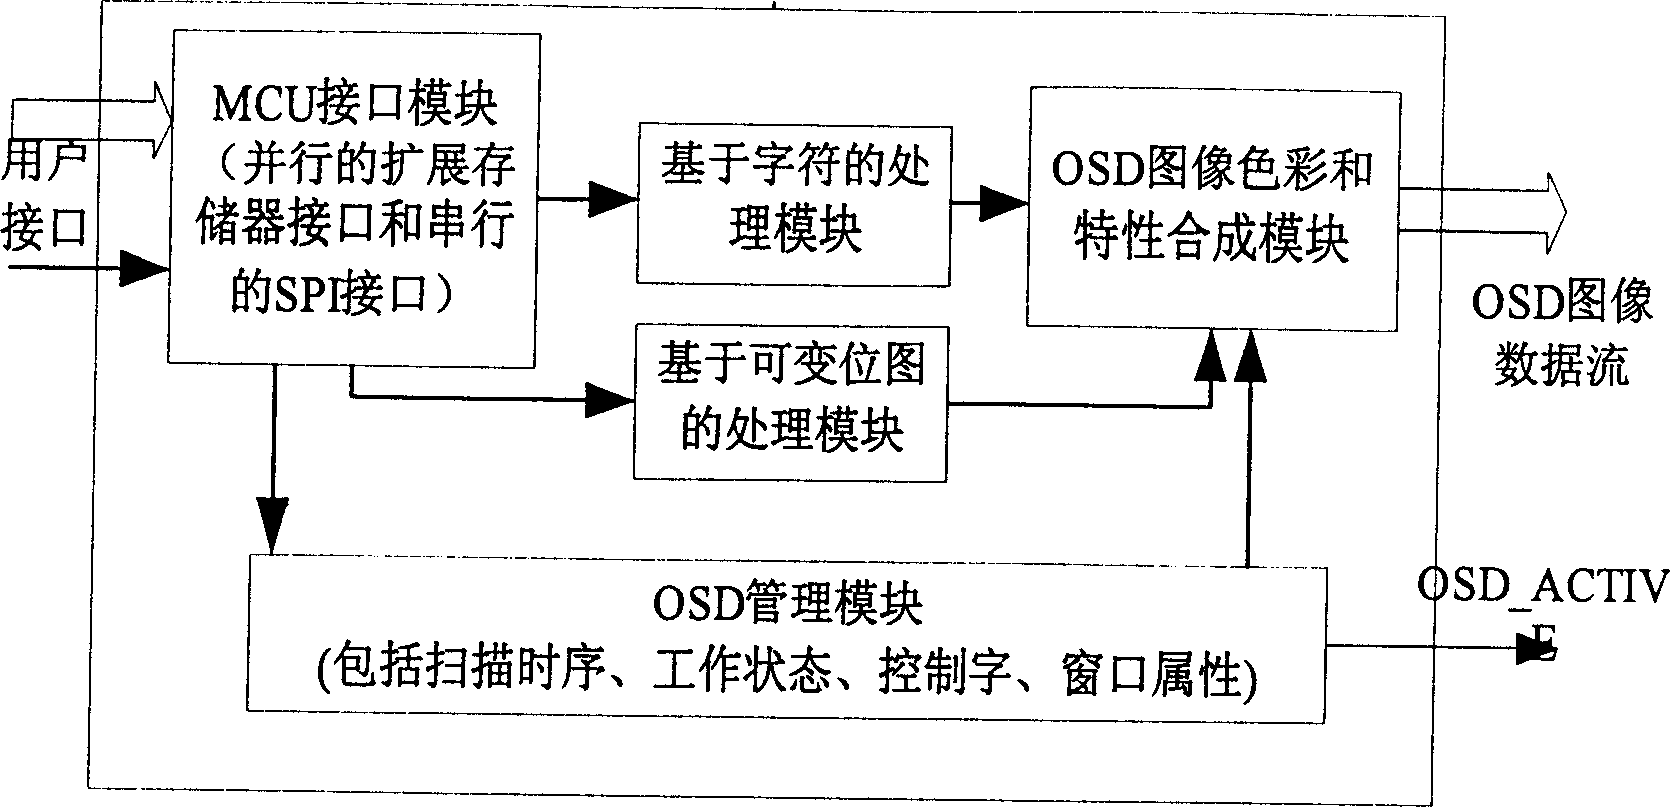 Digital OSD controller based on FRGA